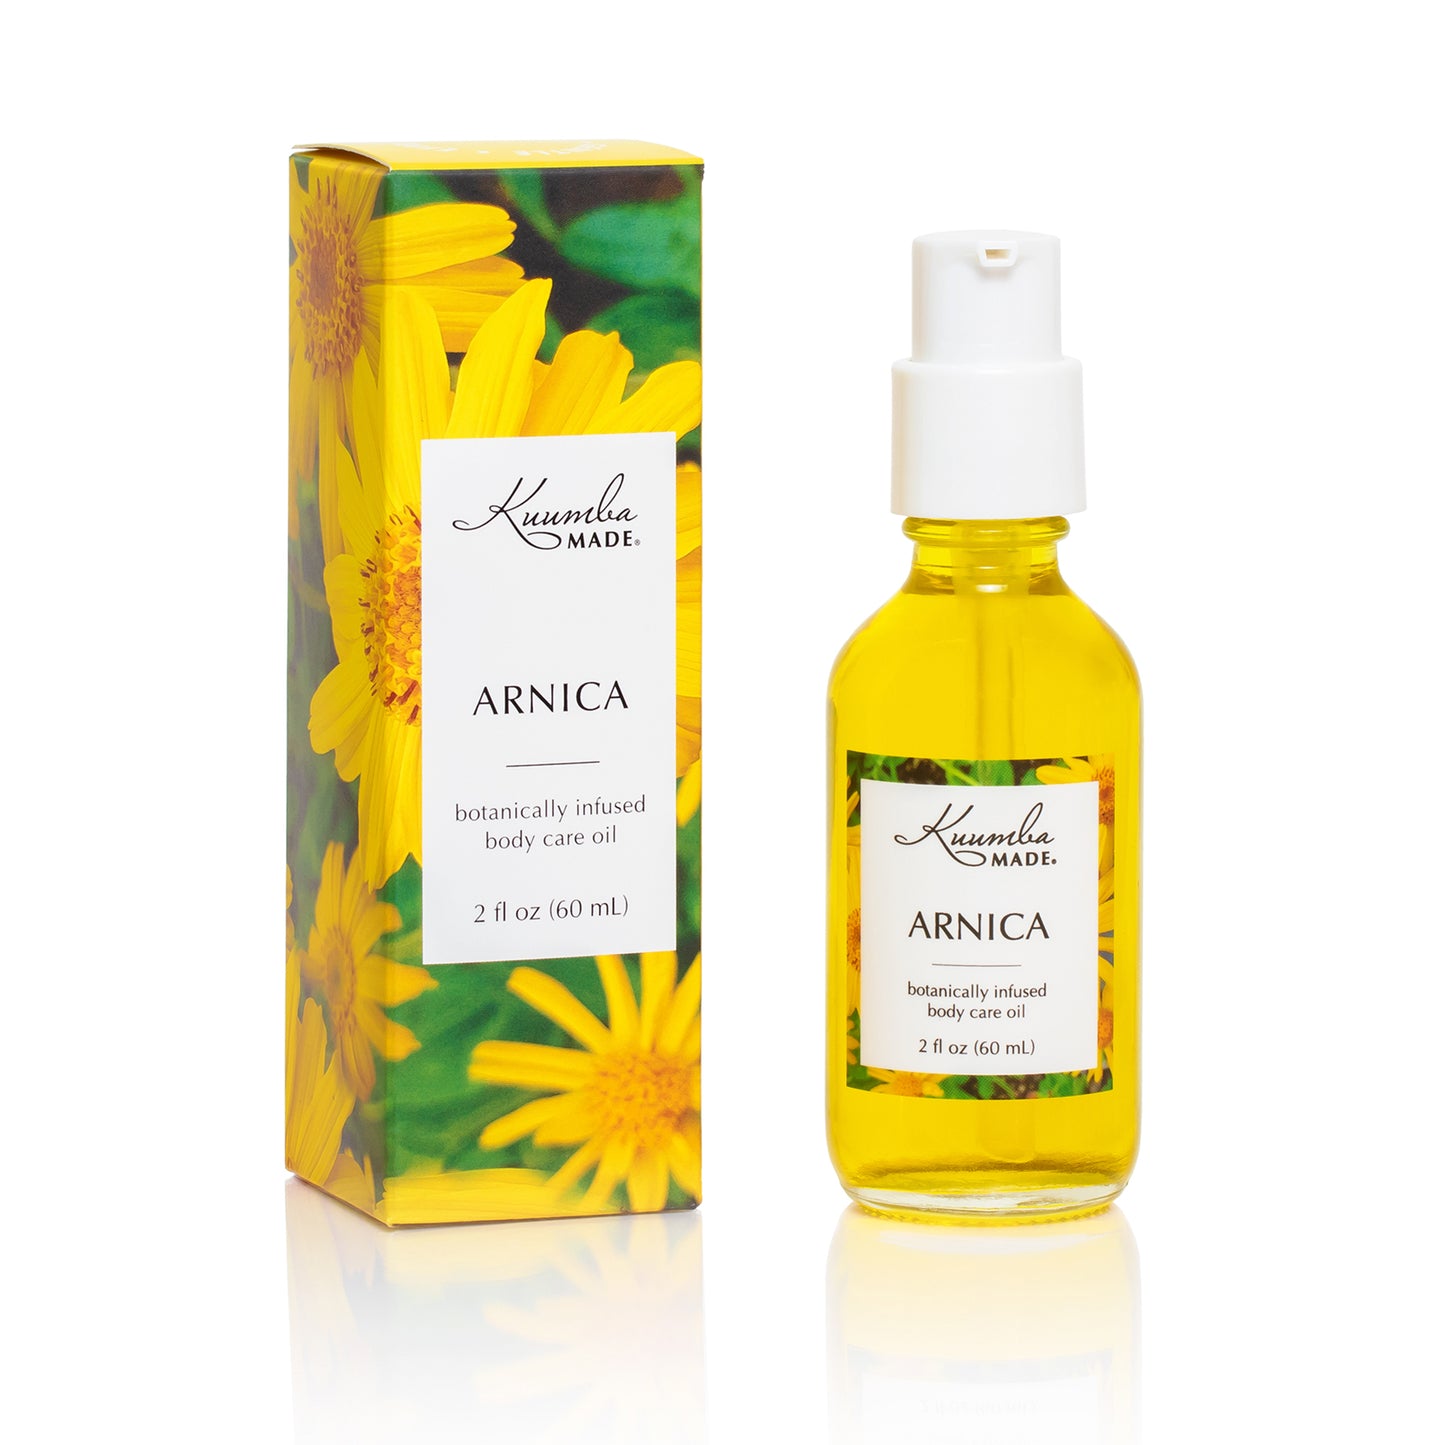 Arnica Botanically Infused Body Care Oil 2oz bottle